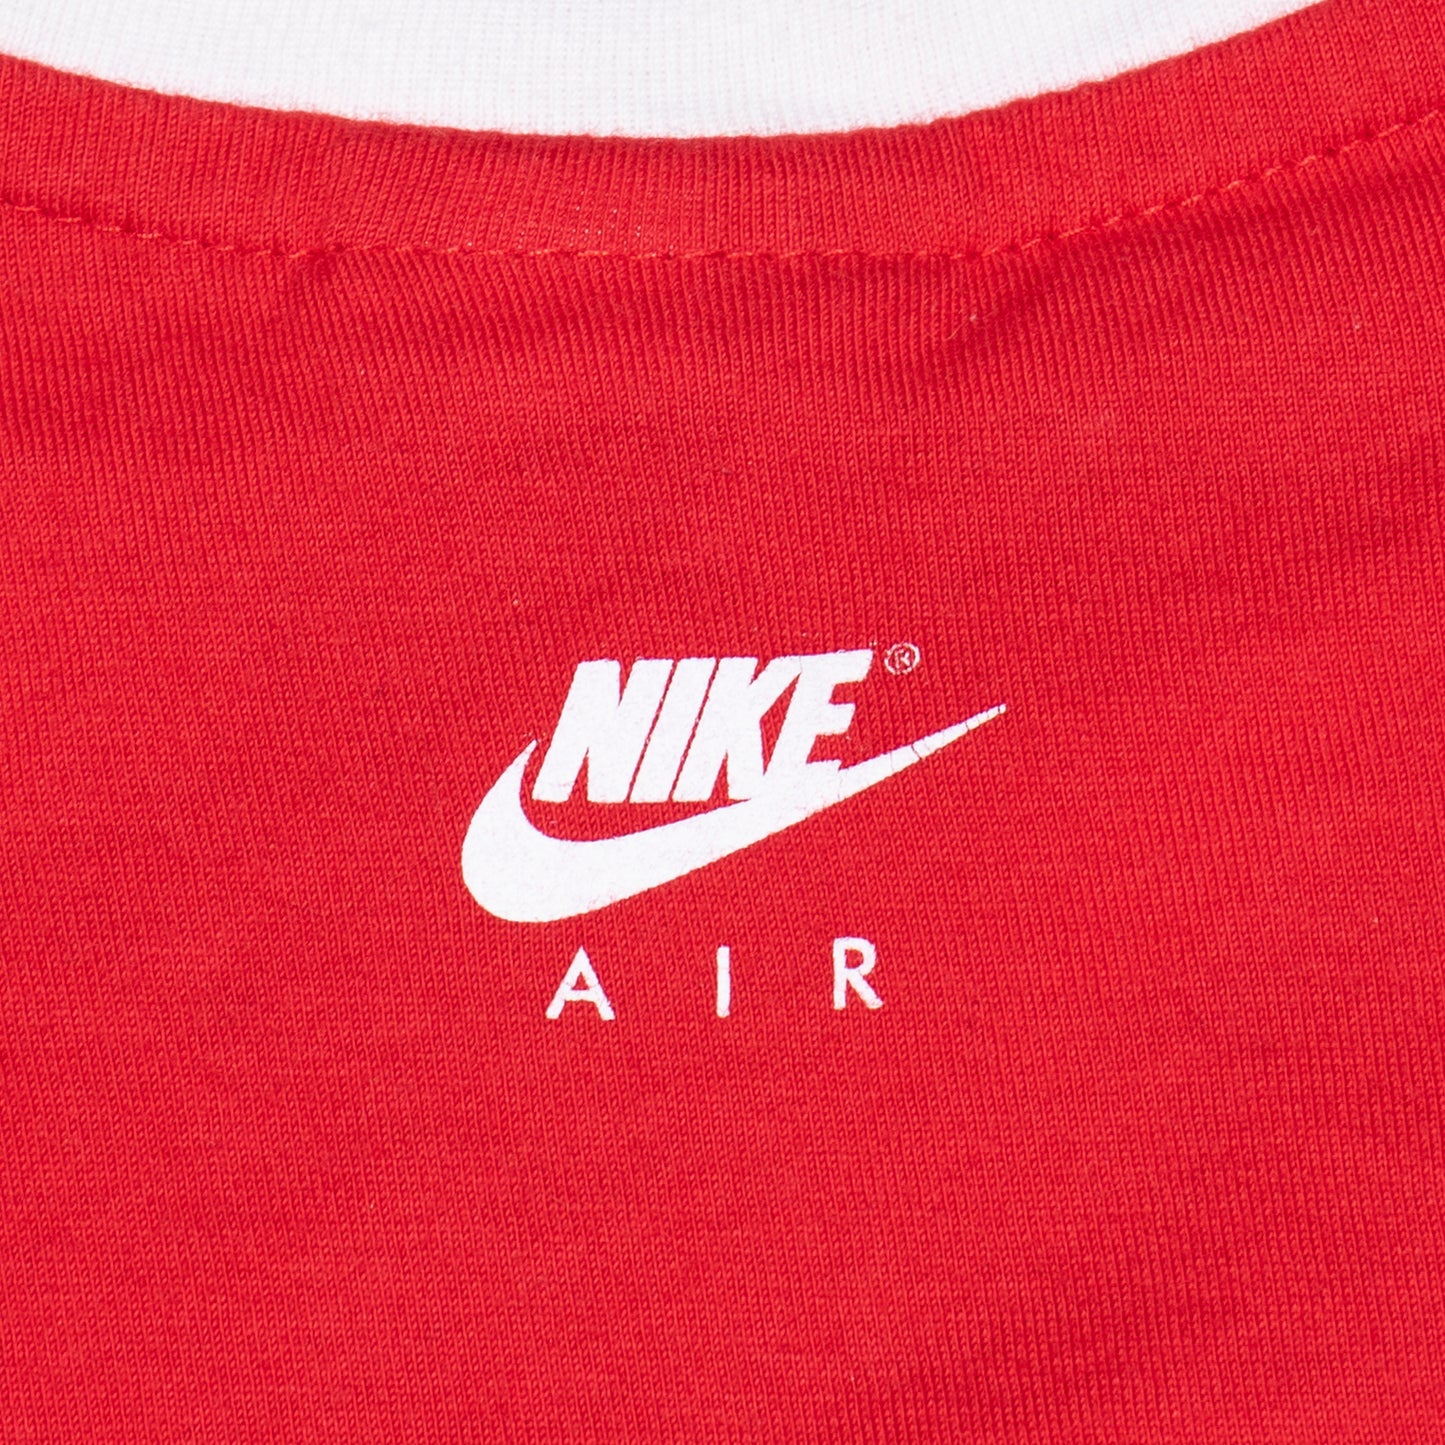 Nike Air Ringer T Shirt, XL